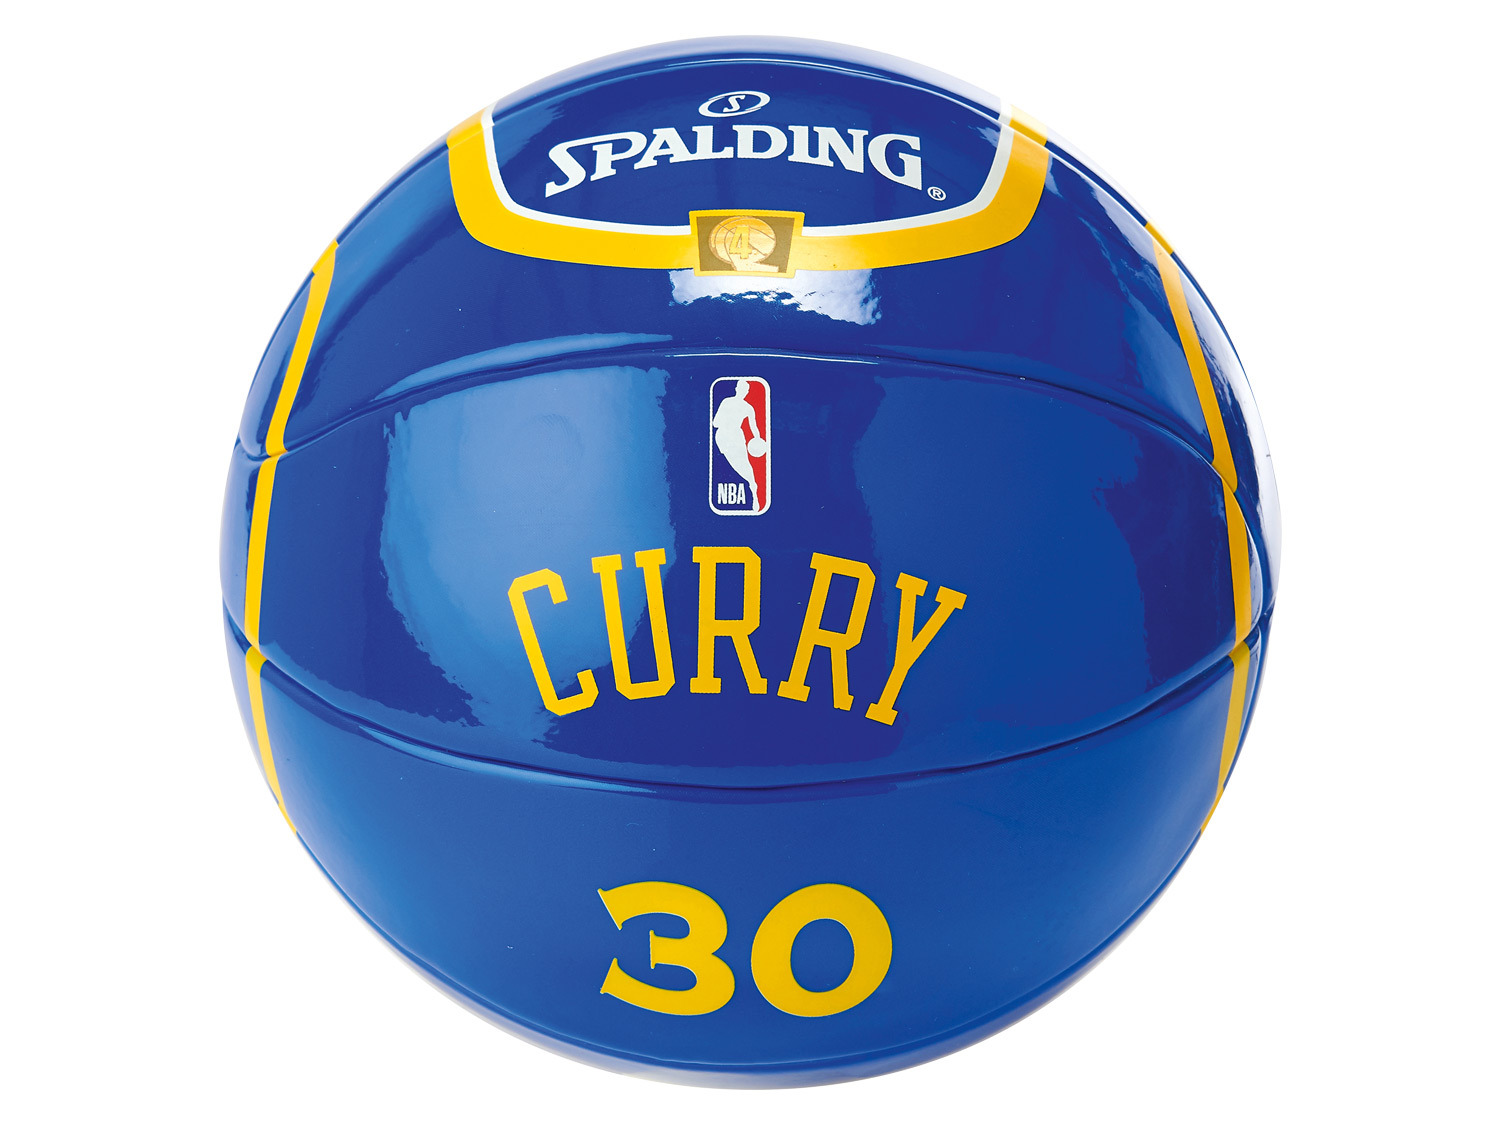 Spalding NBA PLAYER STEPHEN CURRY online kaufen LIDL